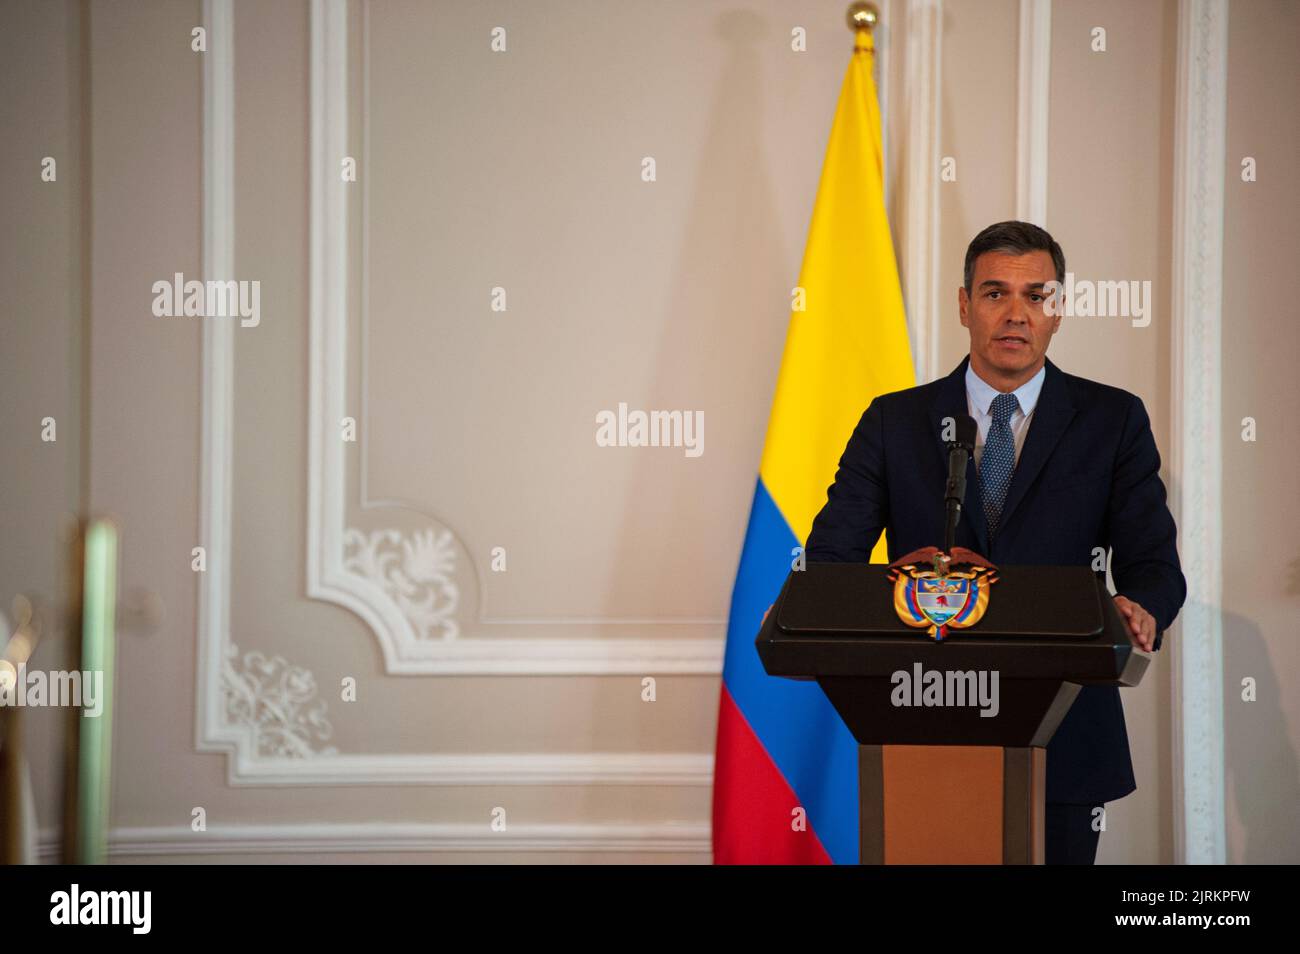 Spain's government president Pedro Sanchez speaks during the official visit of Pedro Sanchez, government president of Spain to Colombia, in Bogota, Co Stock Photo